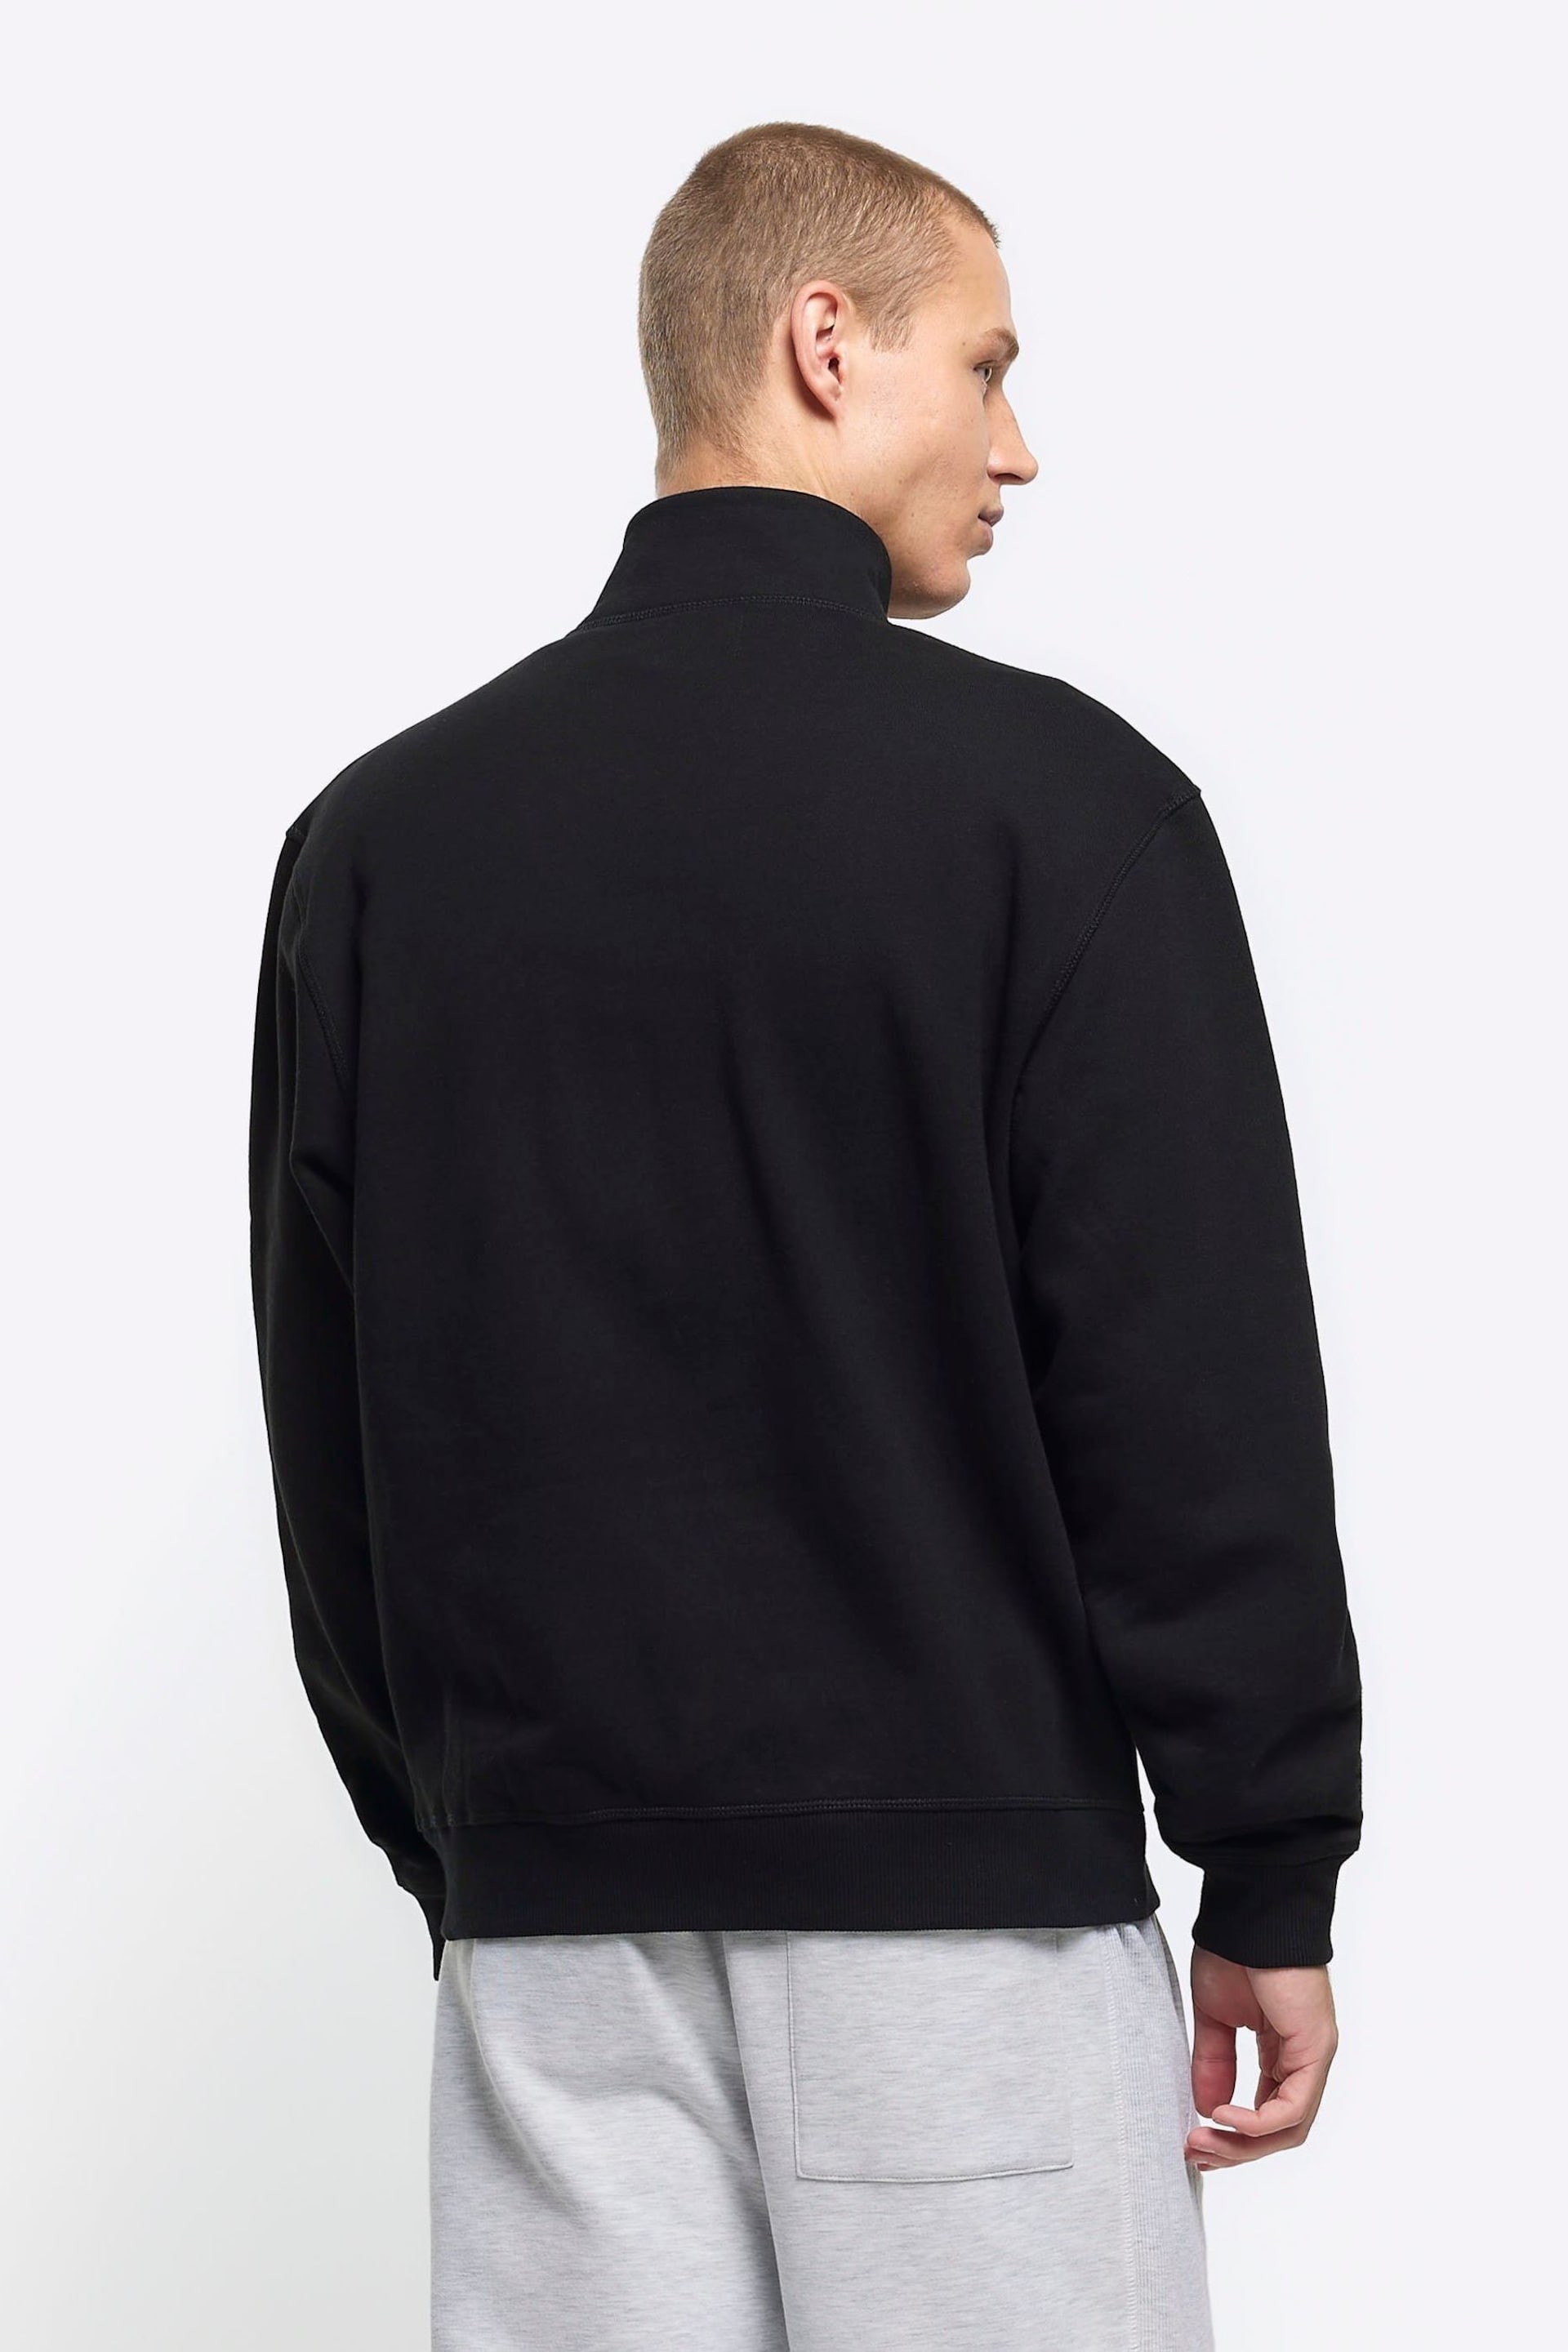 River Island Black Long Sleeve Regular Fit Zip Thru Sweatshirt - Image 2 of 4